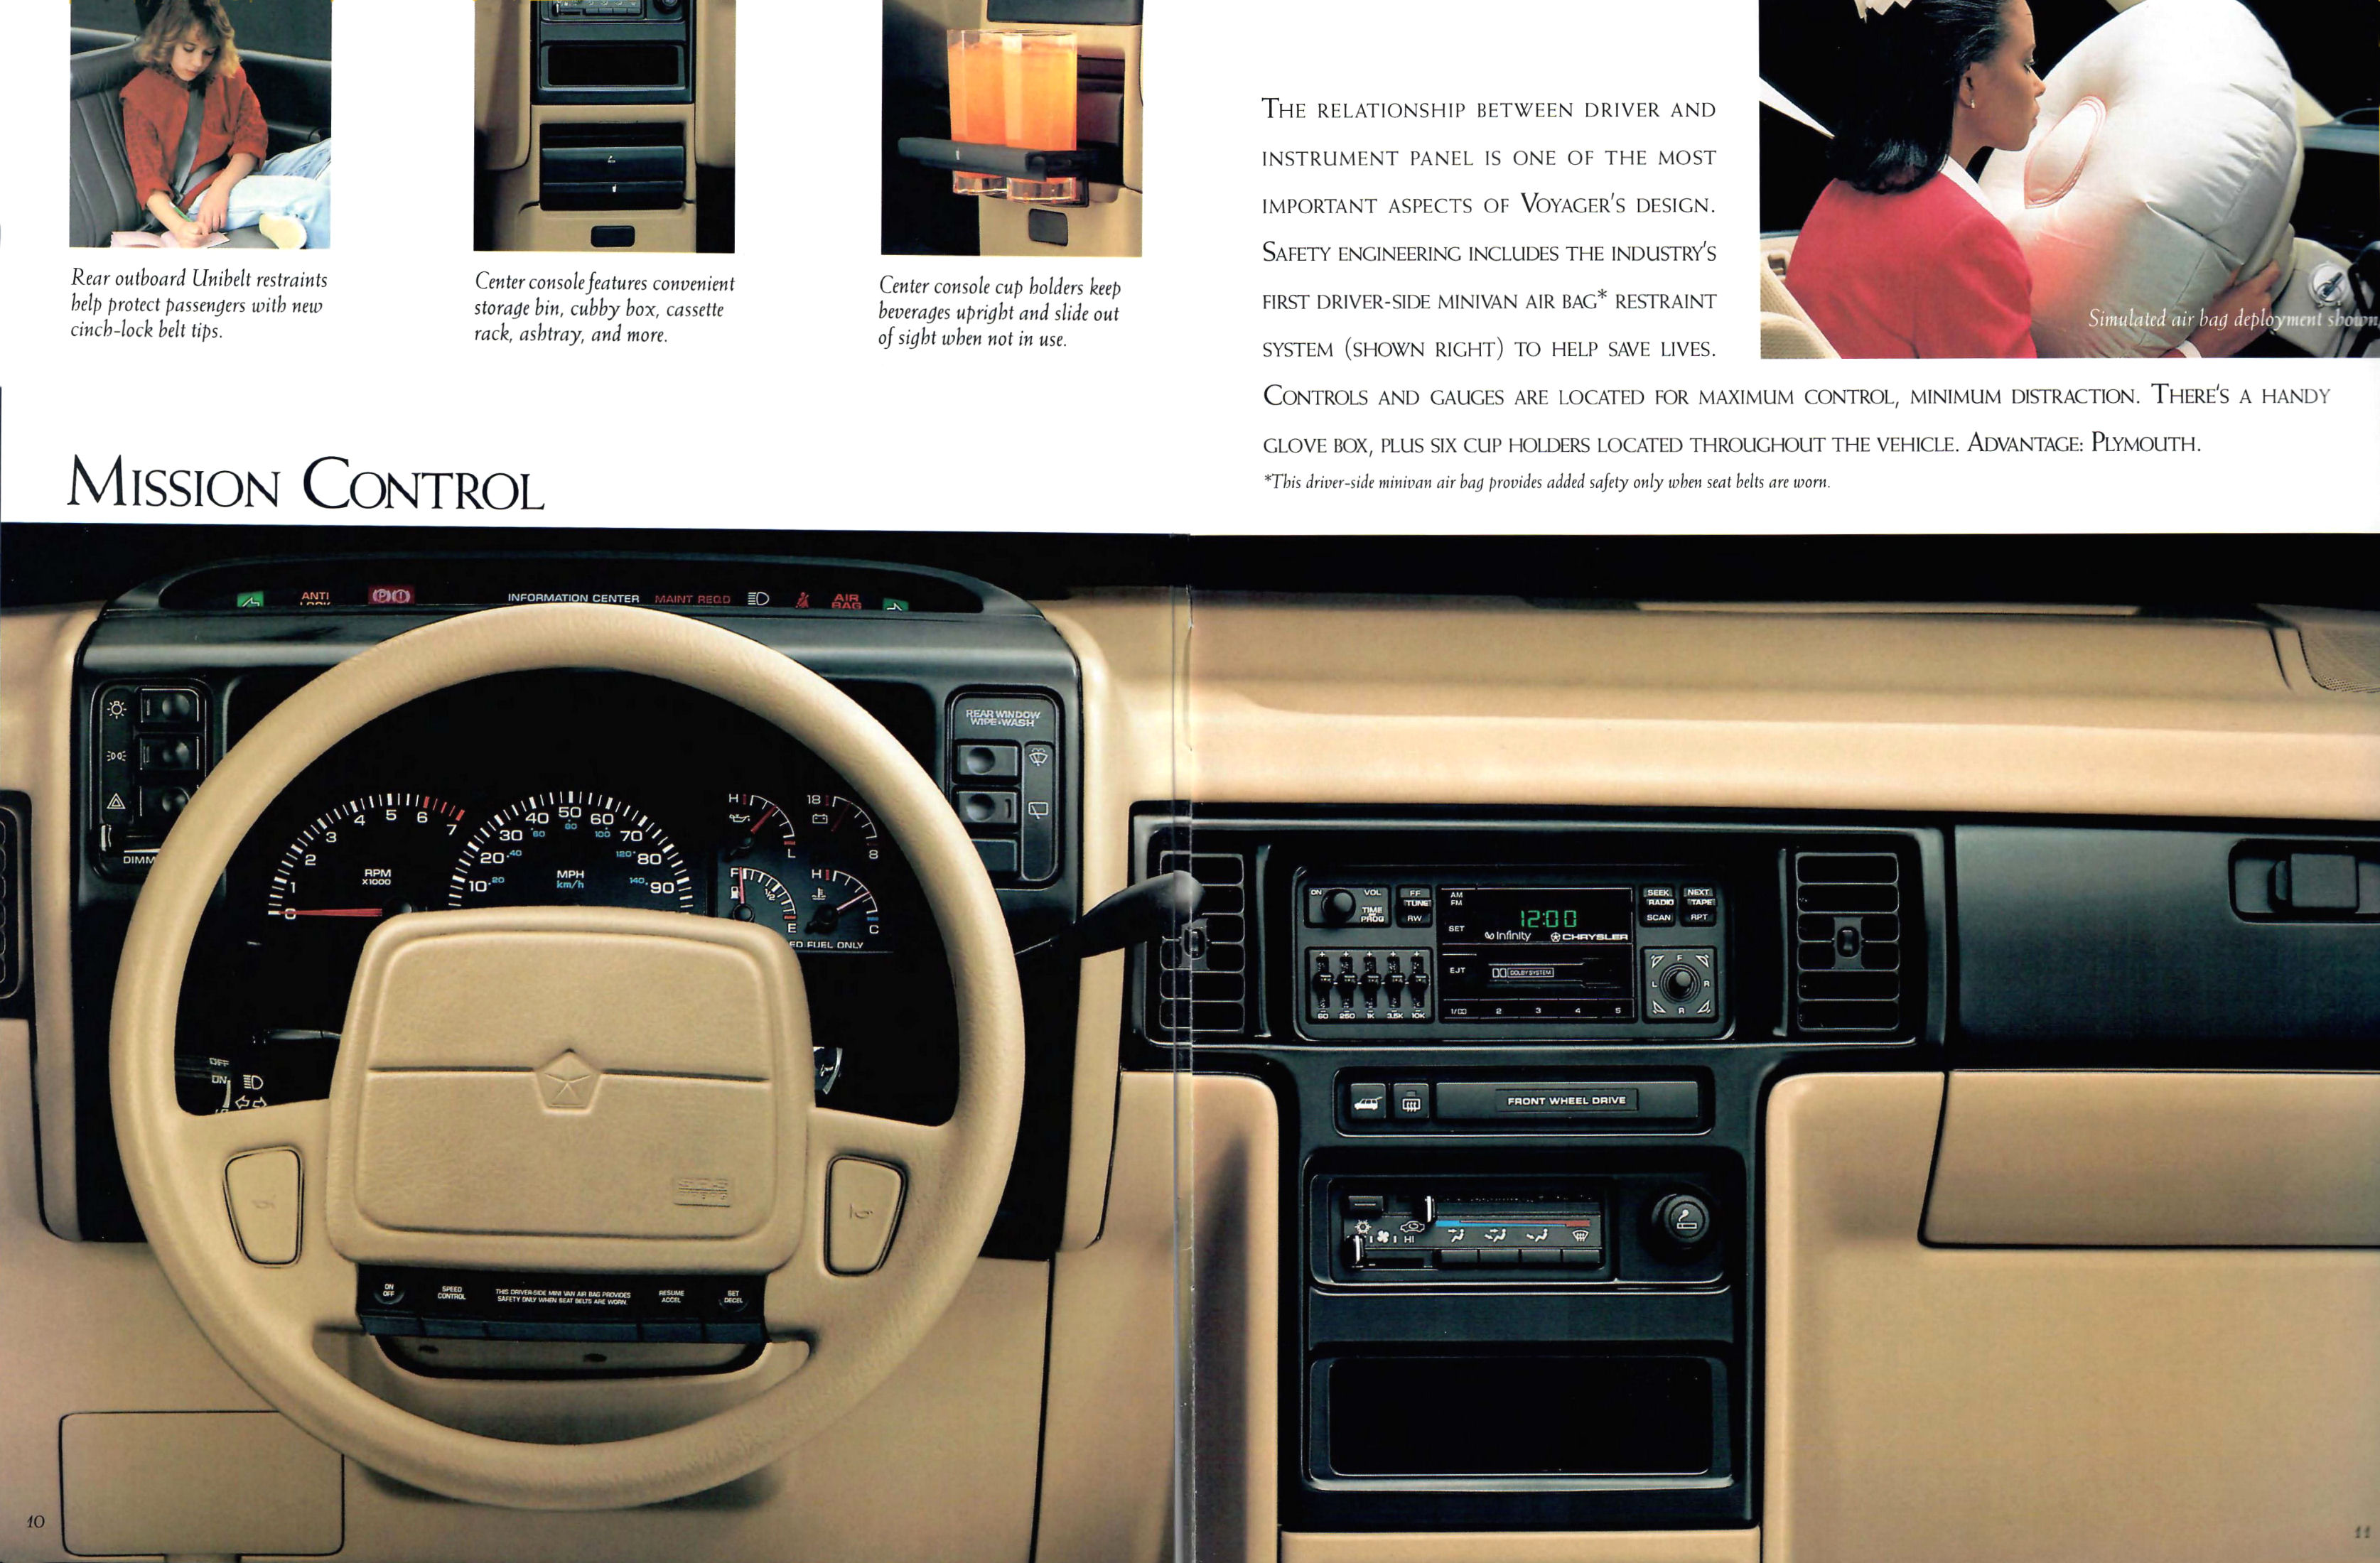 1992 Chrysler-Plymouth Minvans-10-11